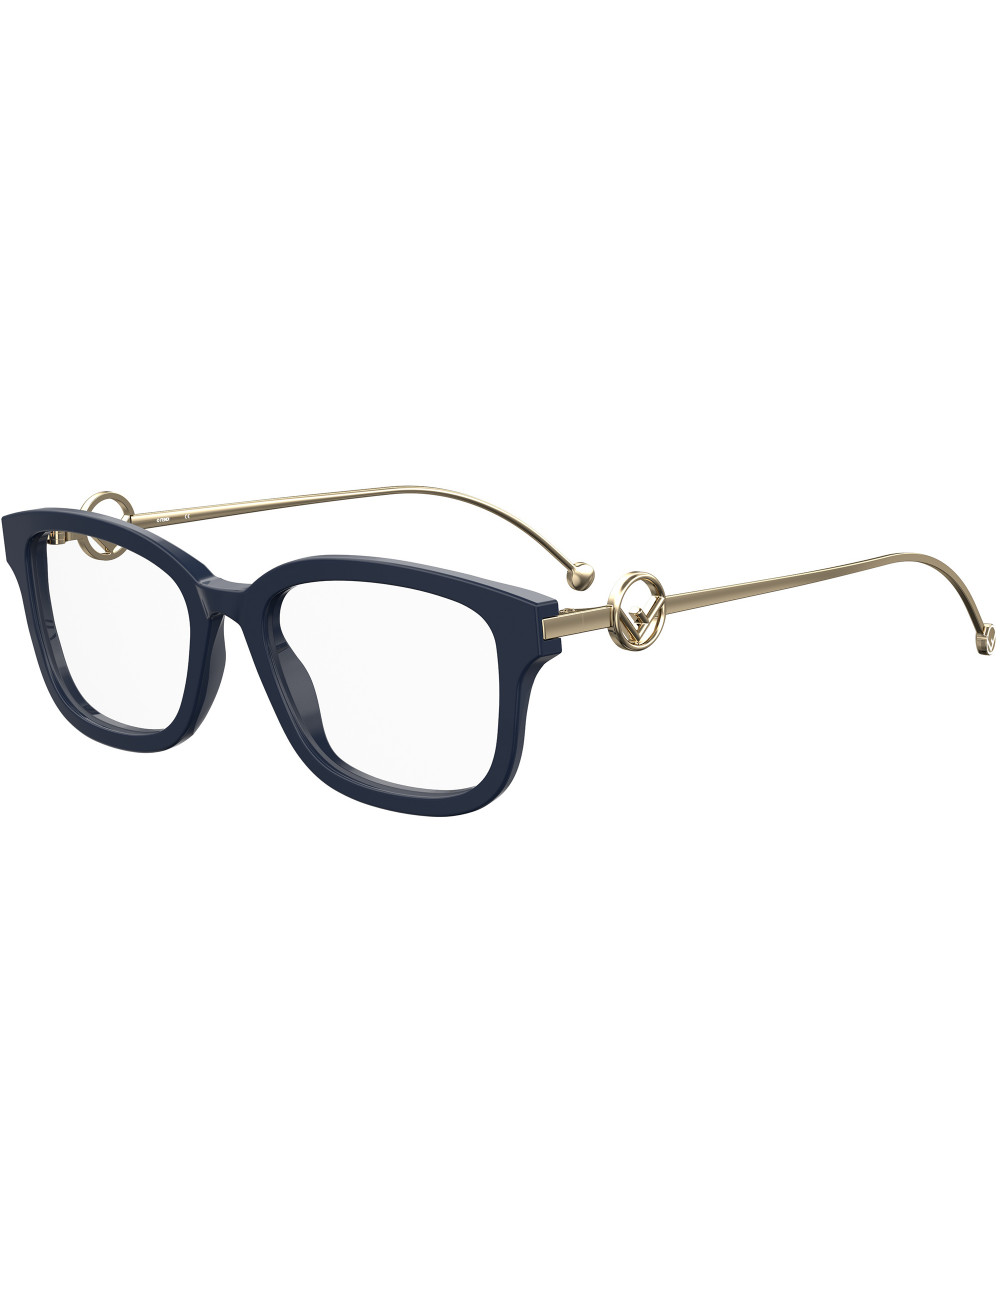 Fendi FF 0418 PJP cat eye eyeglasses for woman - Ottica Mauro